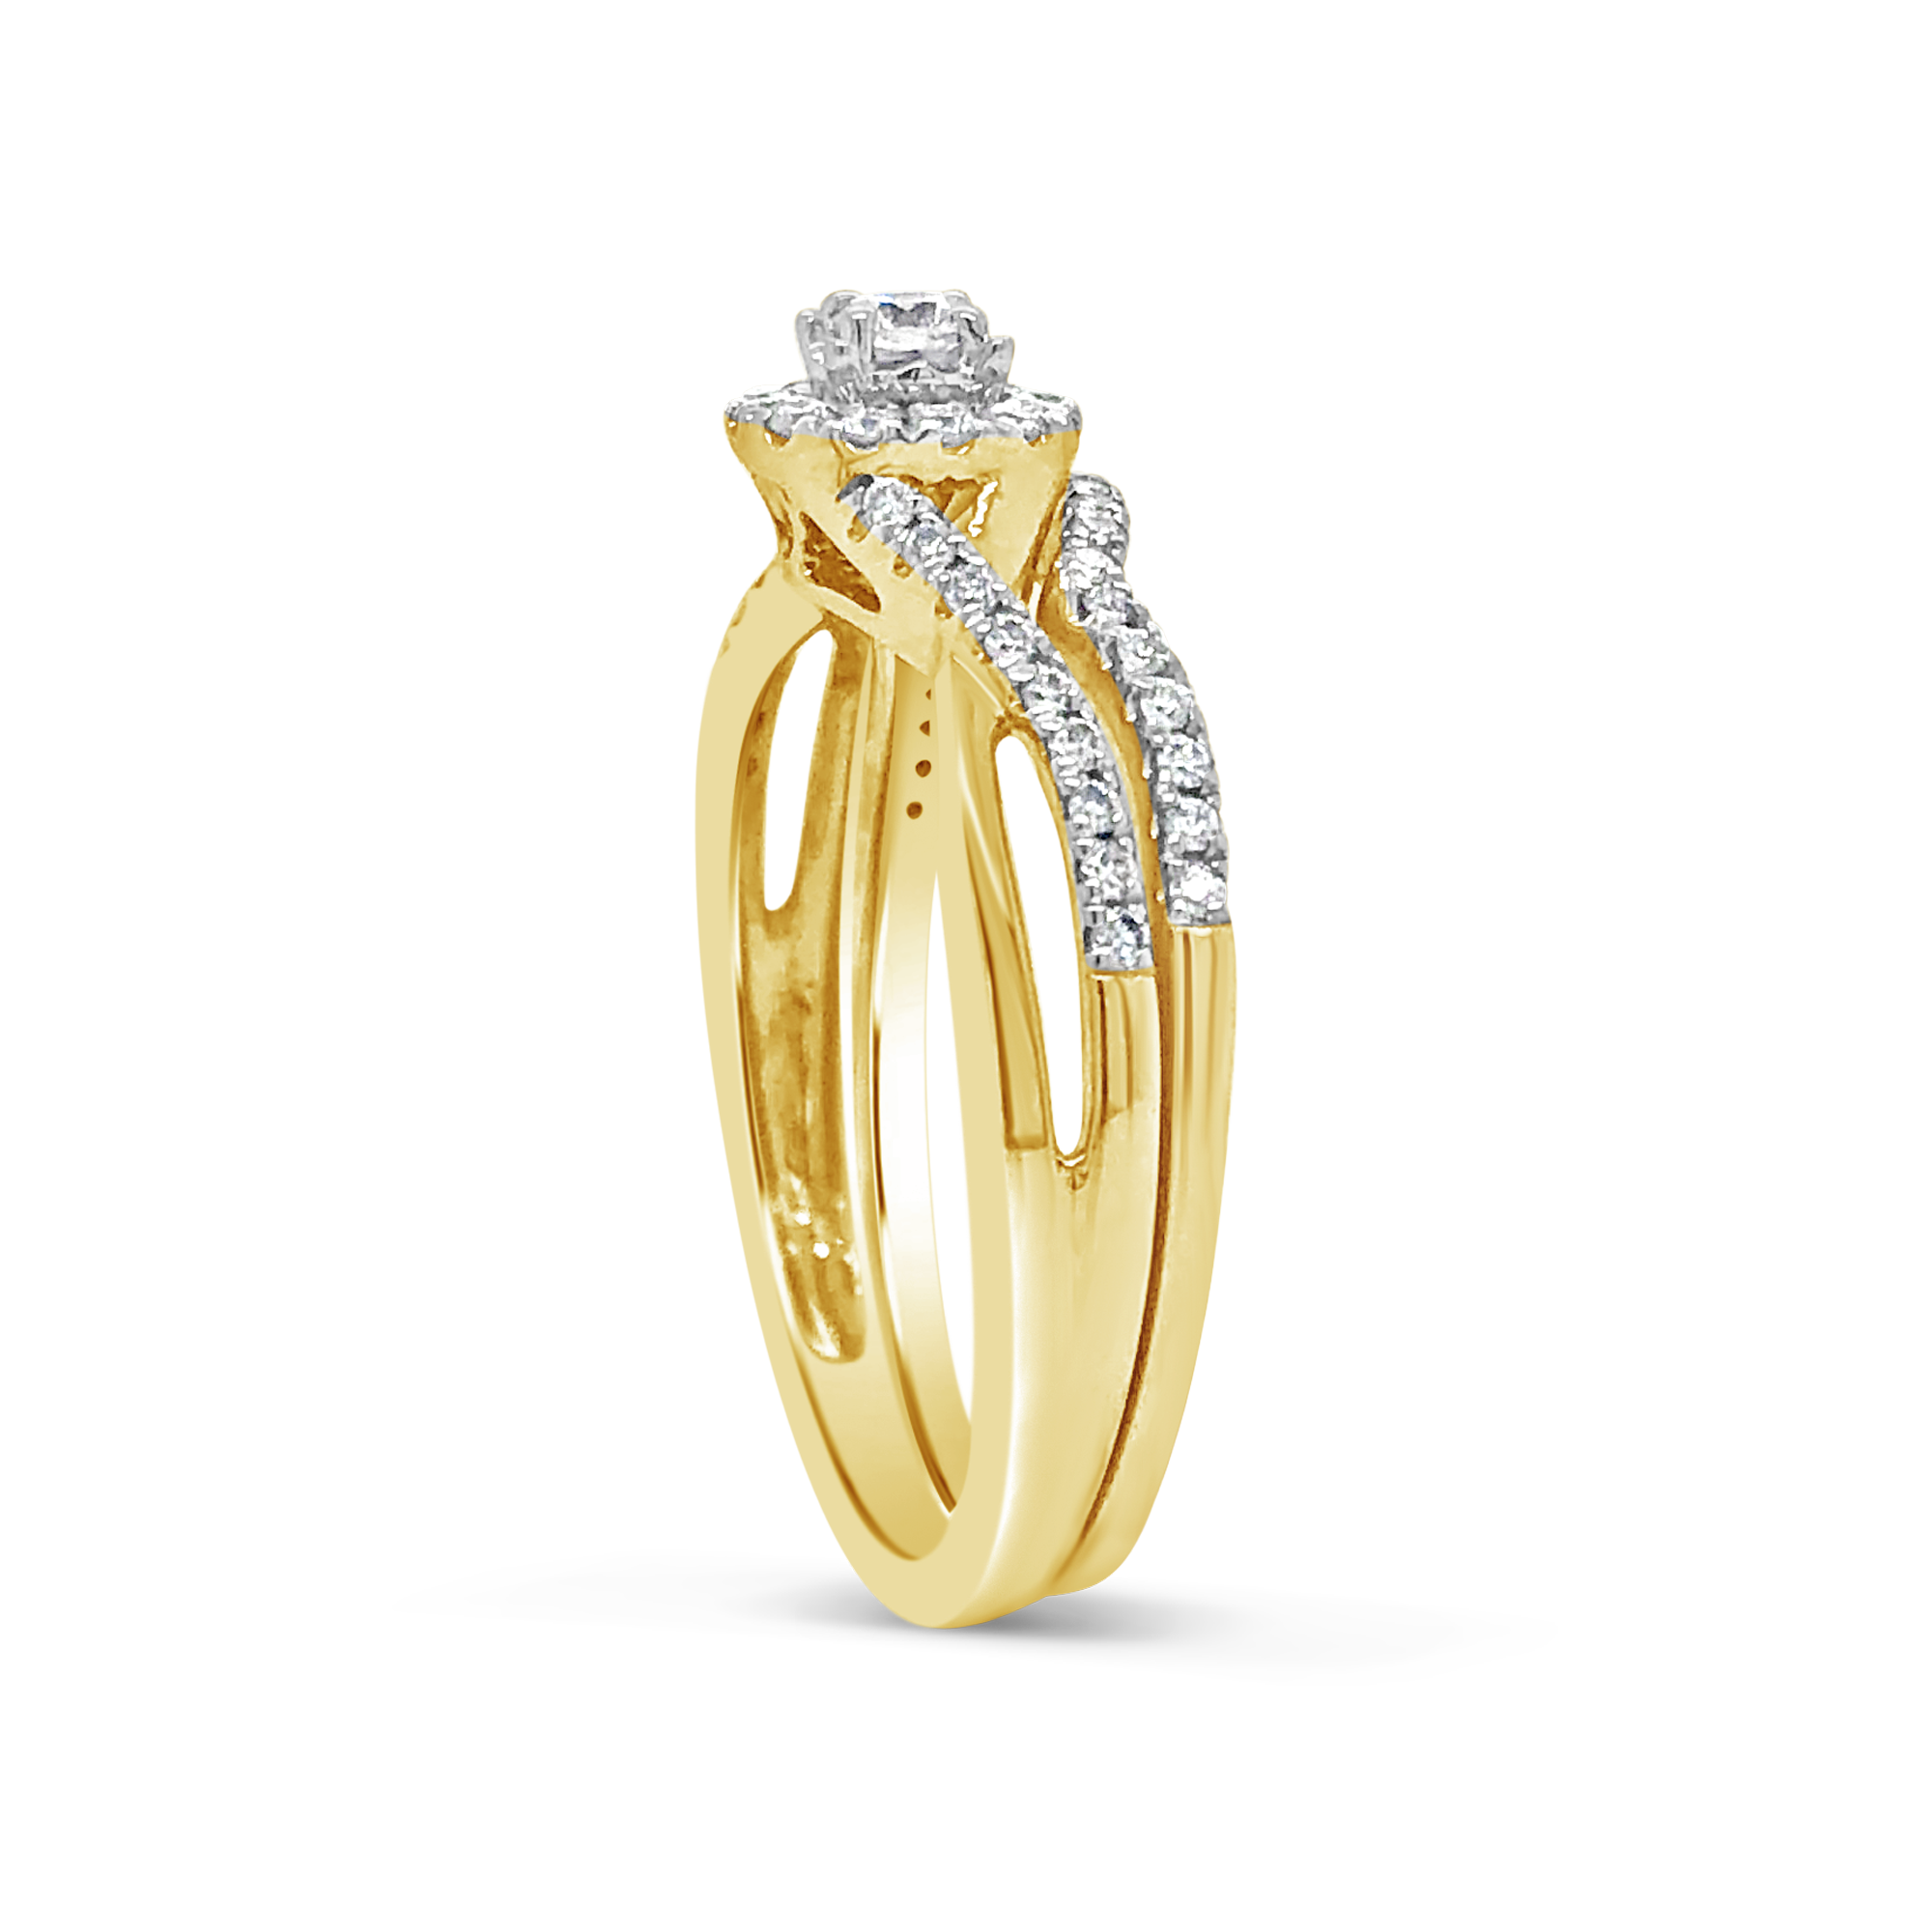 Diamond Halo Engagement Ring 2 CTW Round Cut 14K White Gold